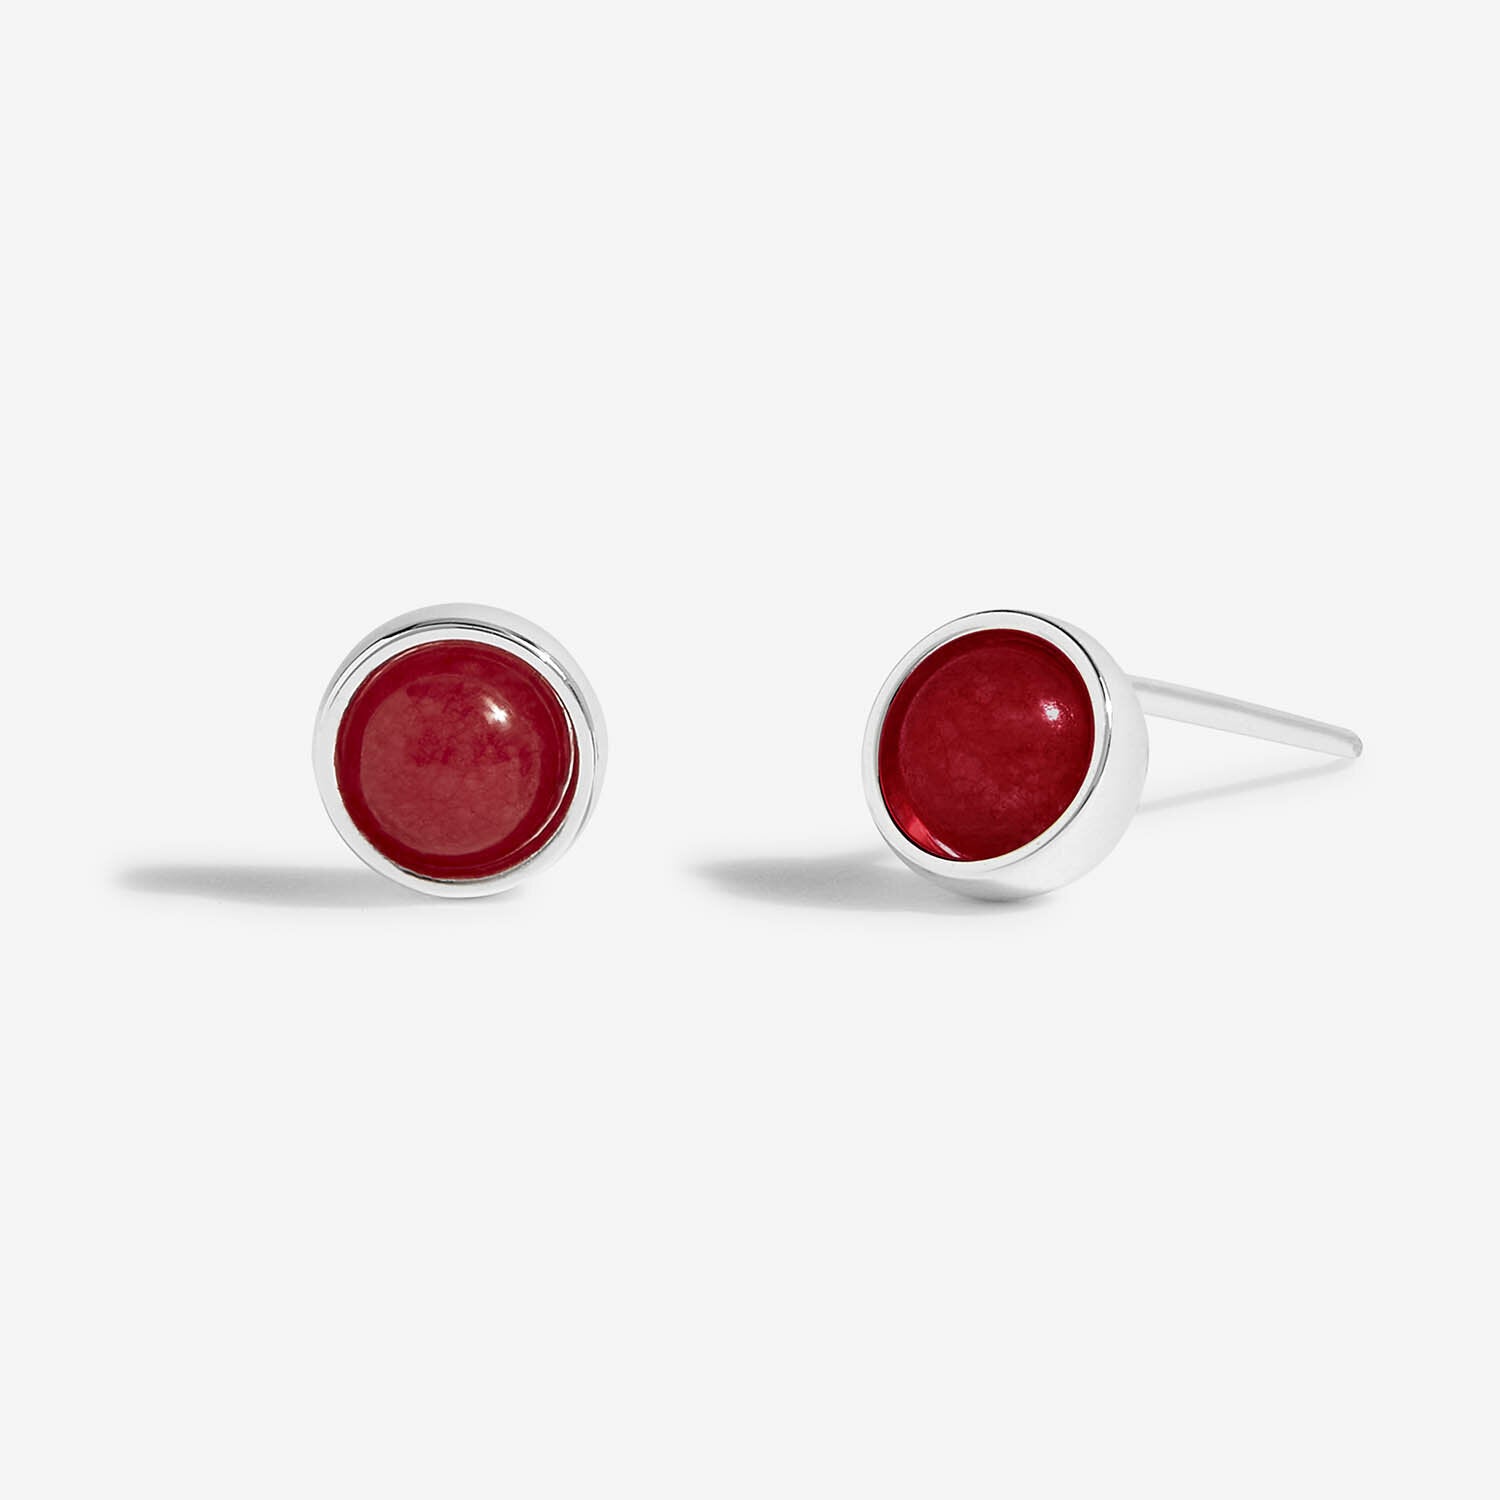 Joma Jewellery - Birthstone Earrings - January - Garnet